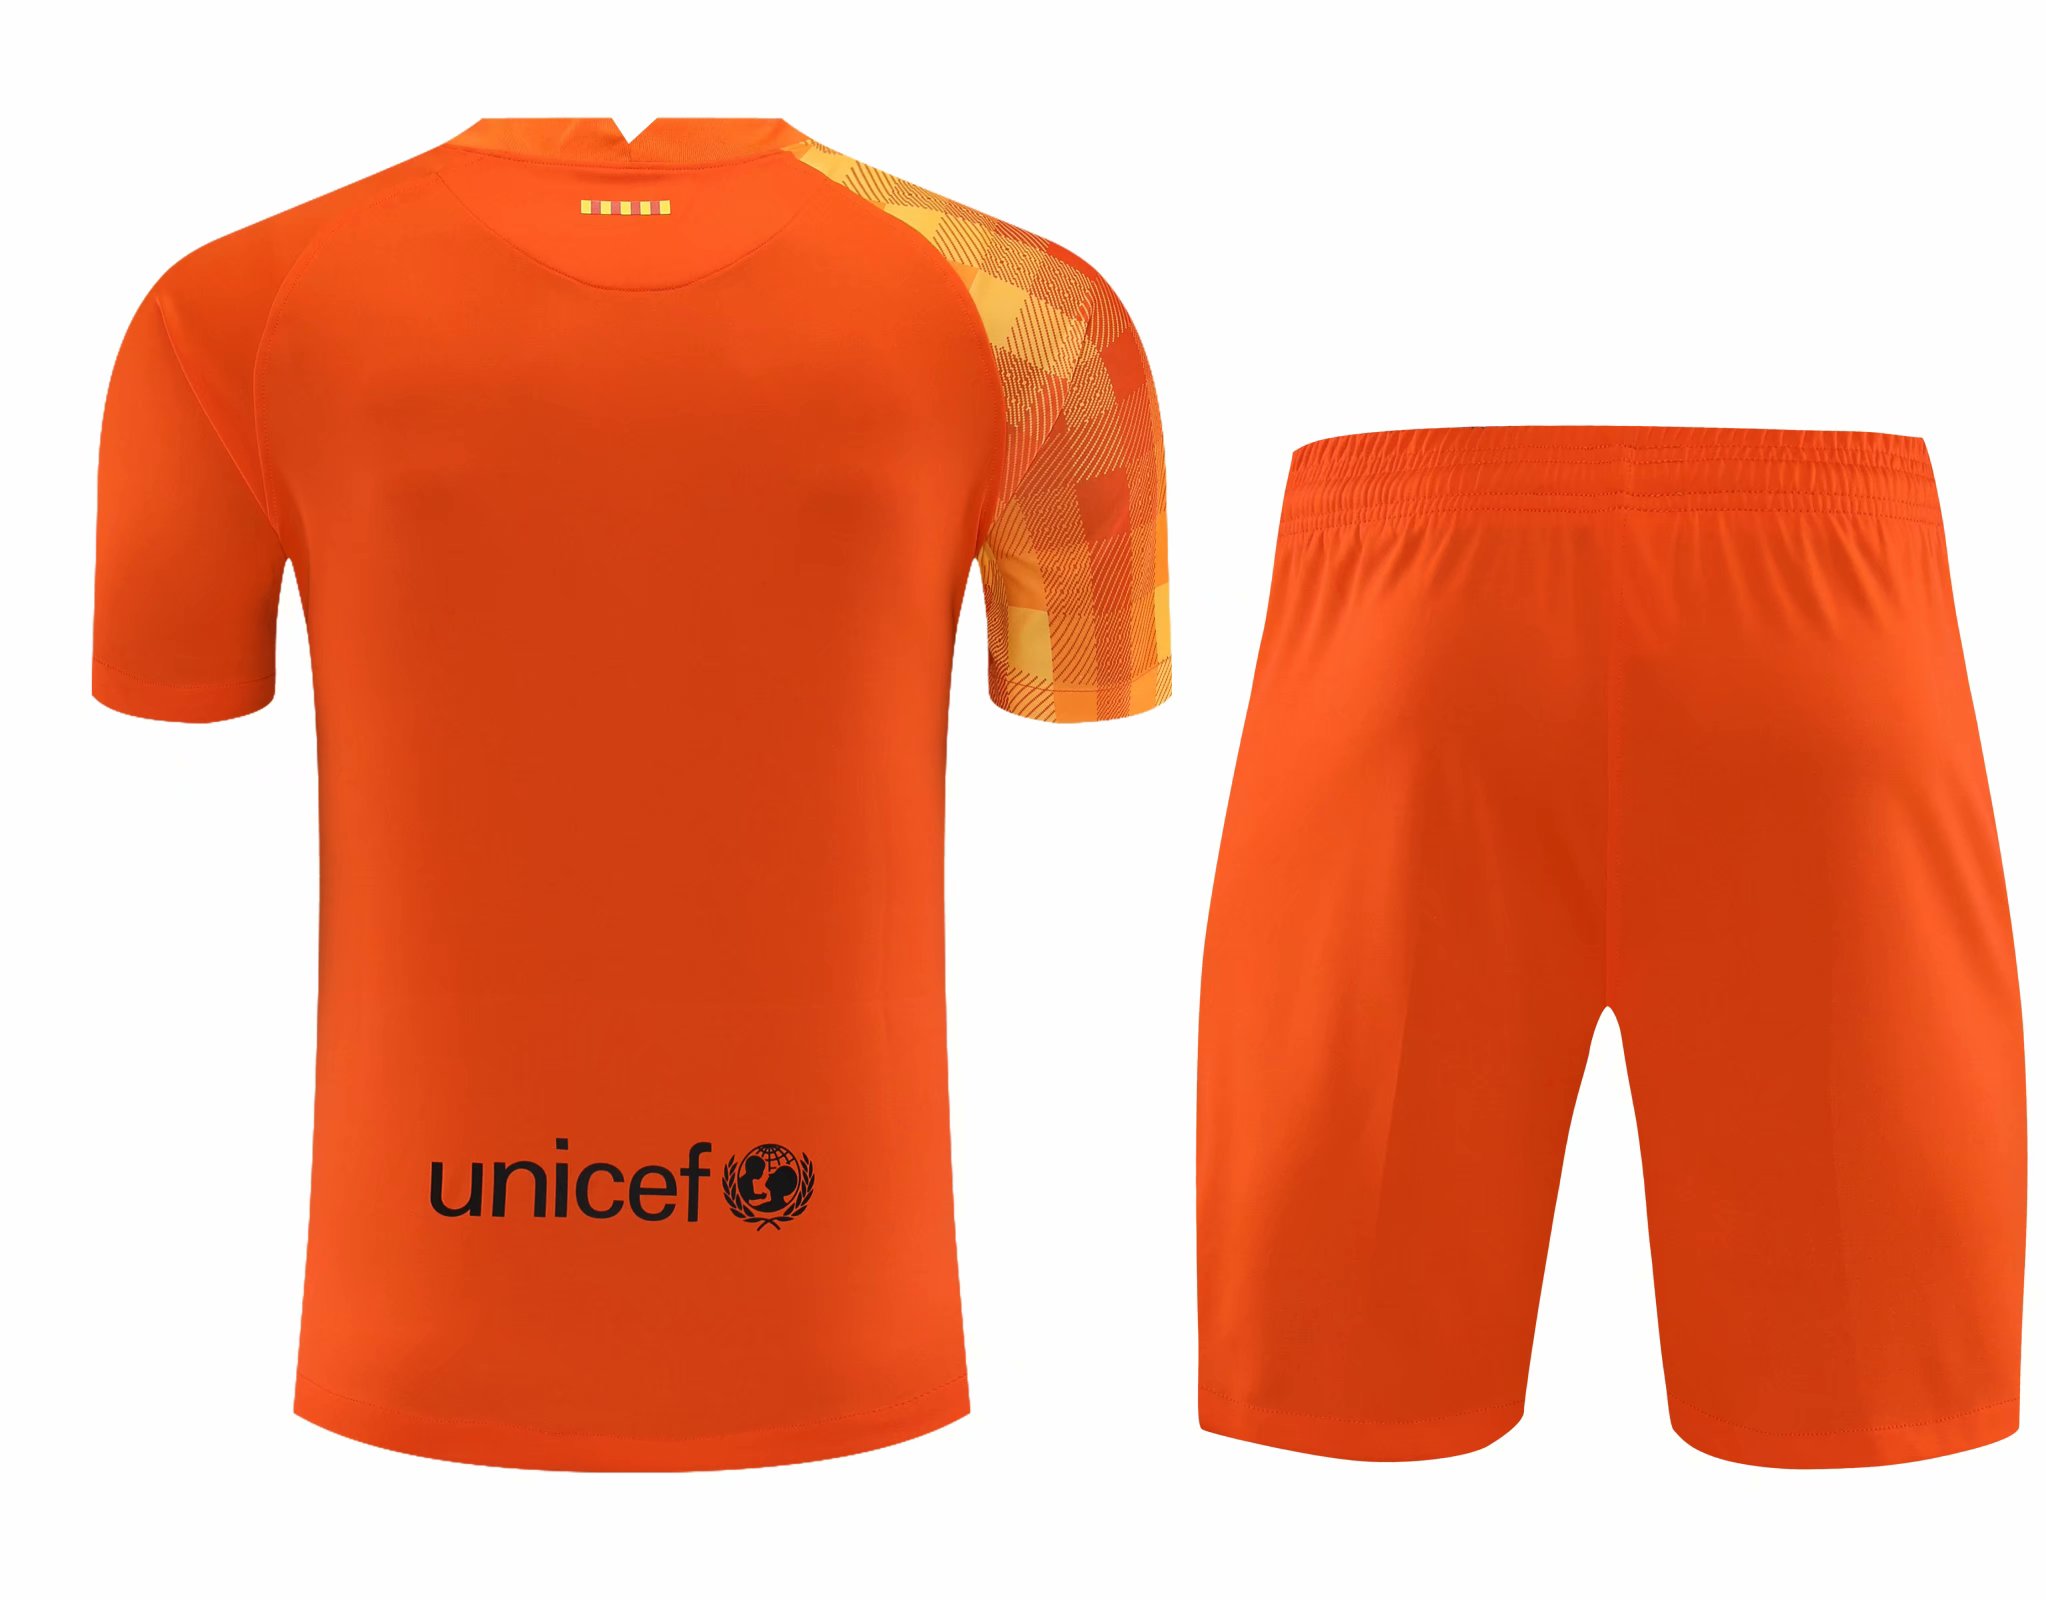 Barcelona Soccer Jersey Goalkeeper Kit(Jersey+Short) Orange Replica 2021/22